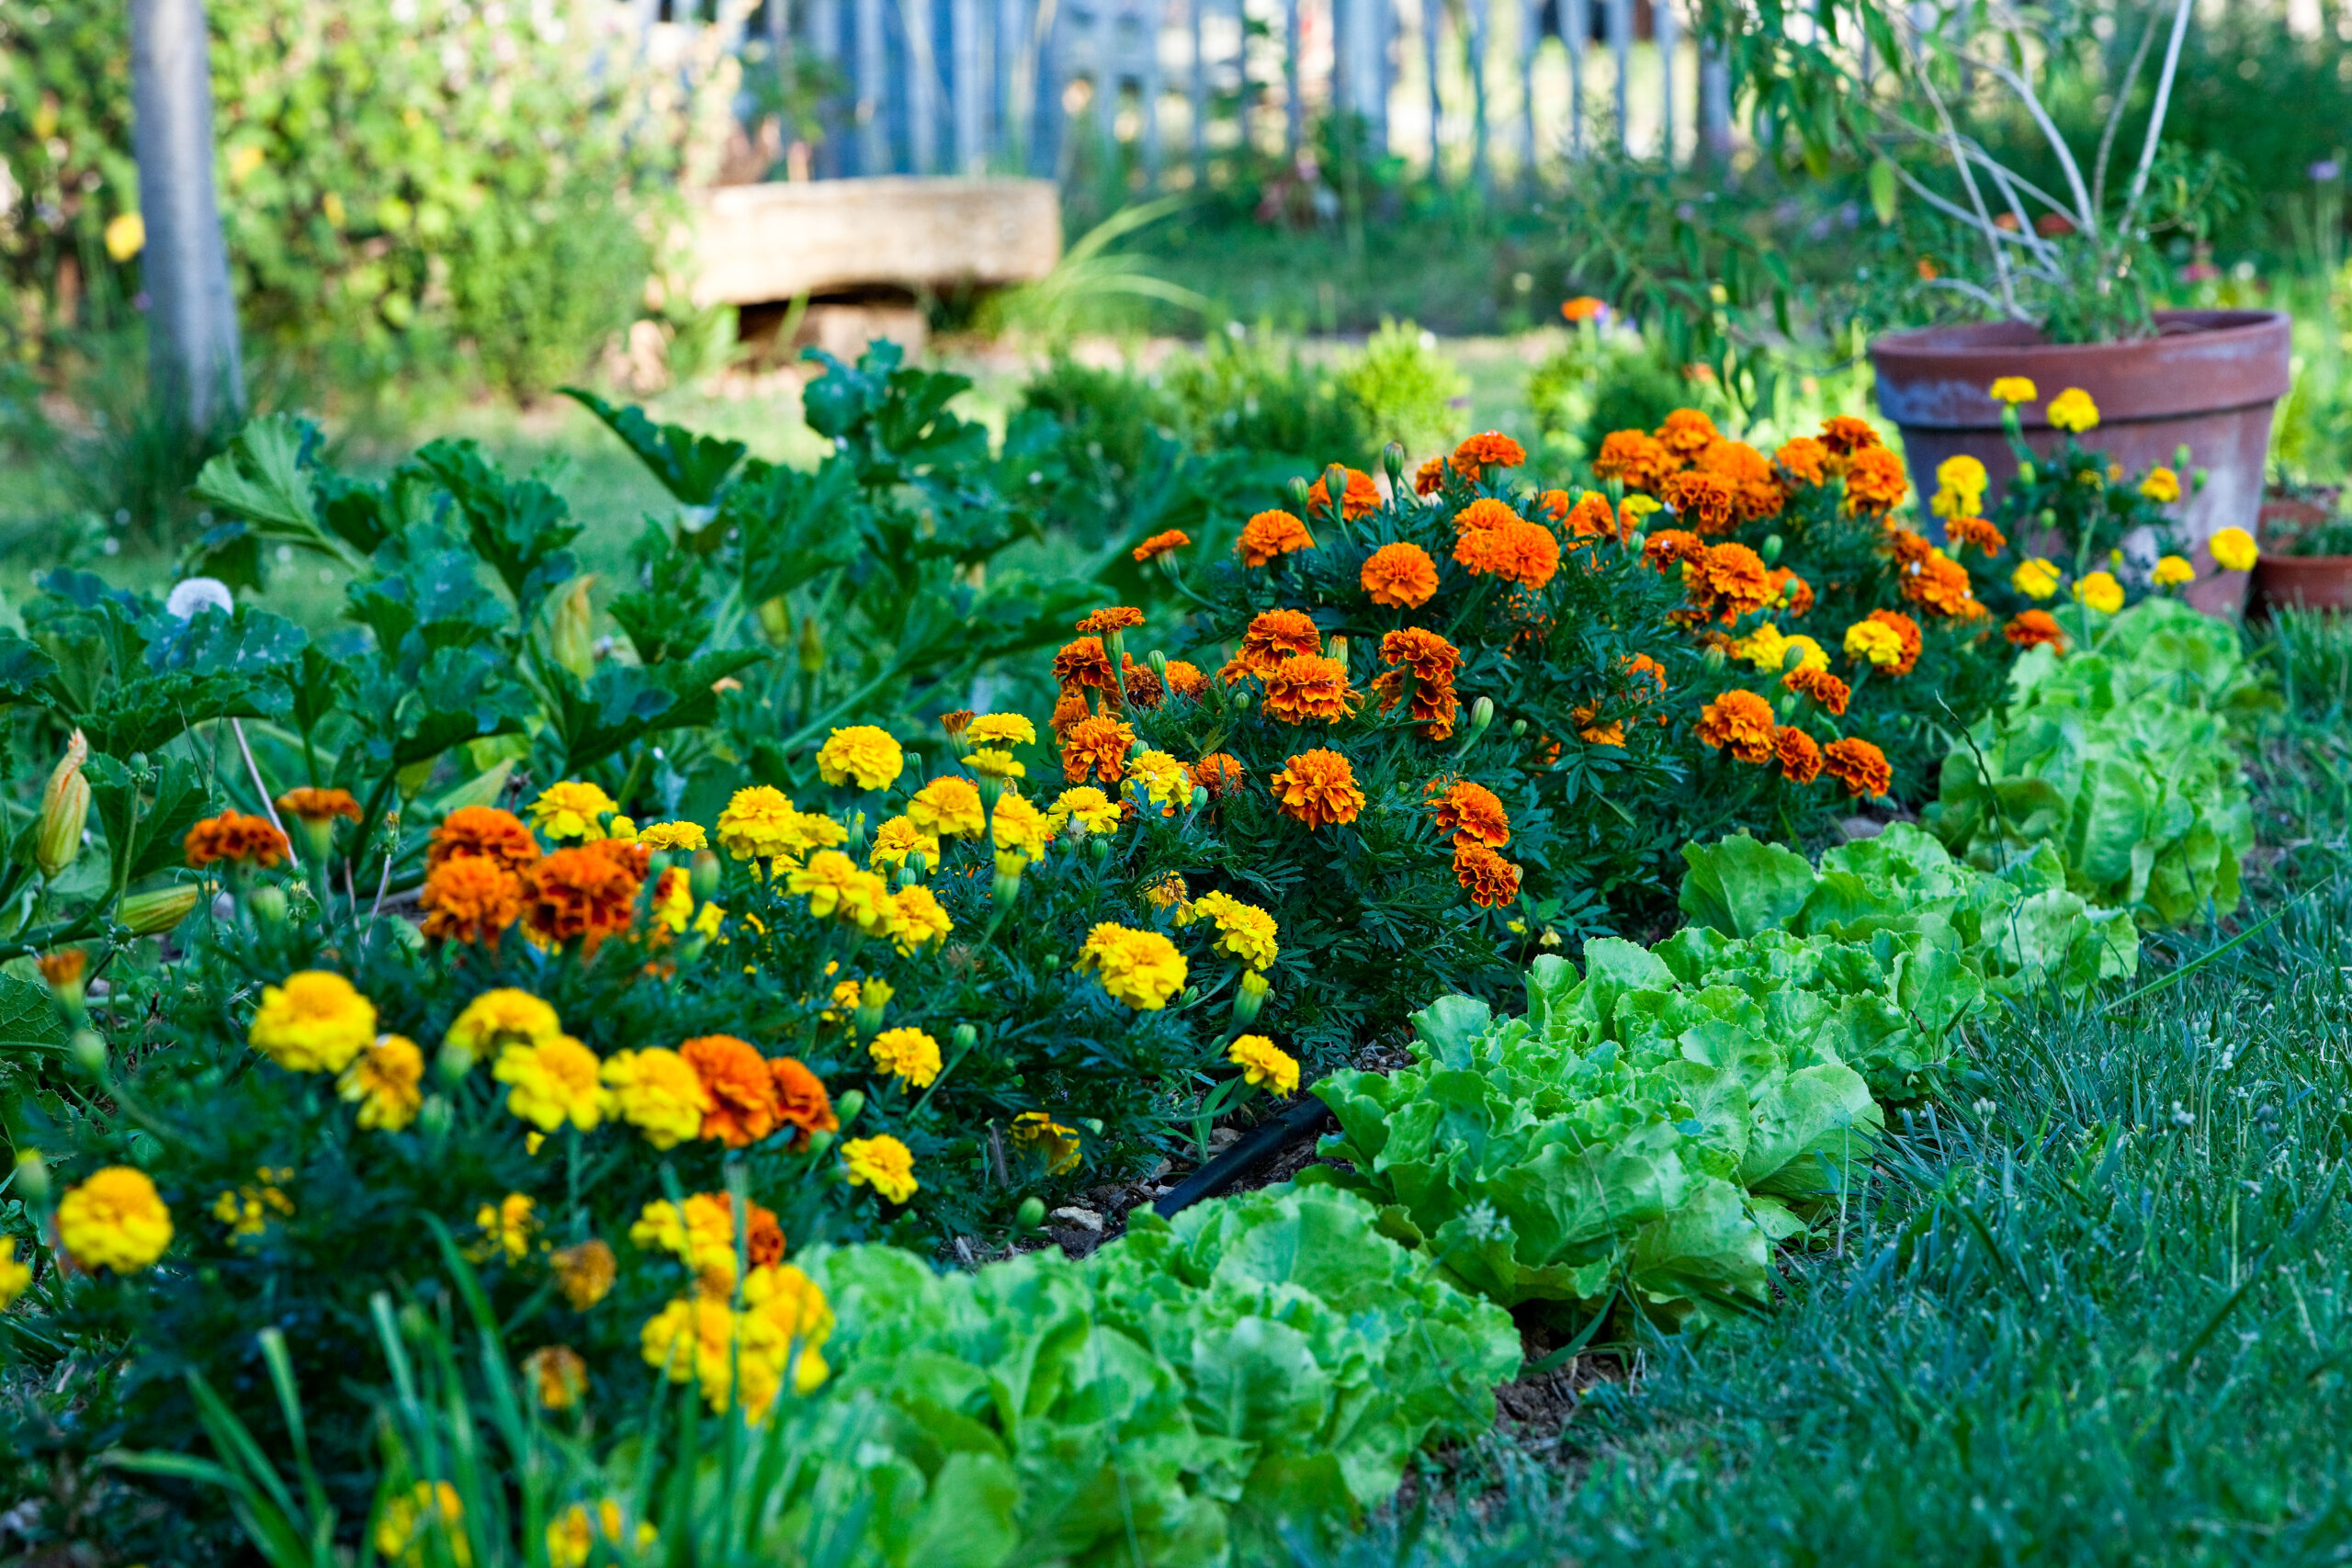 Salad and marigold rows in a garden